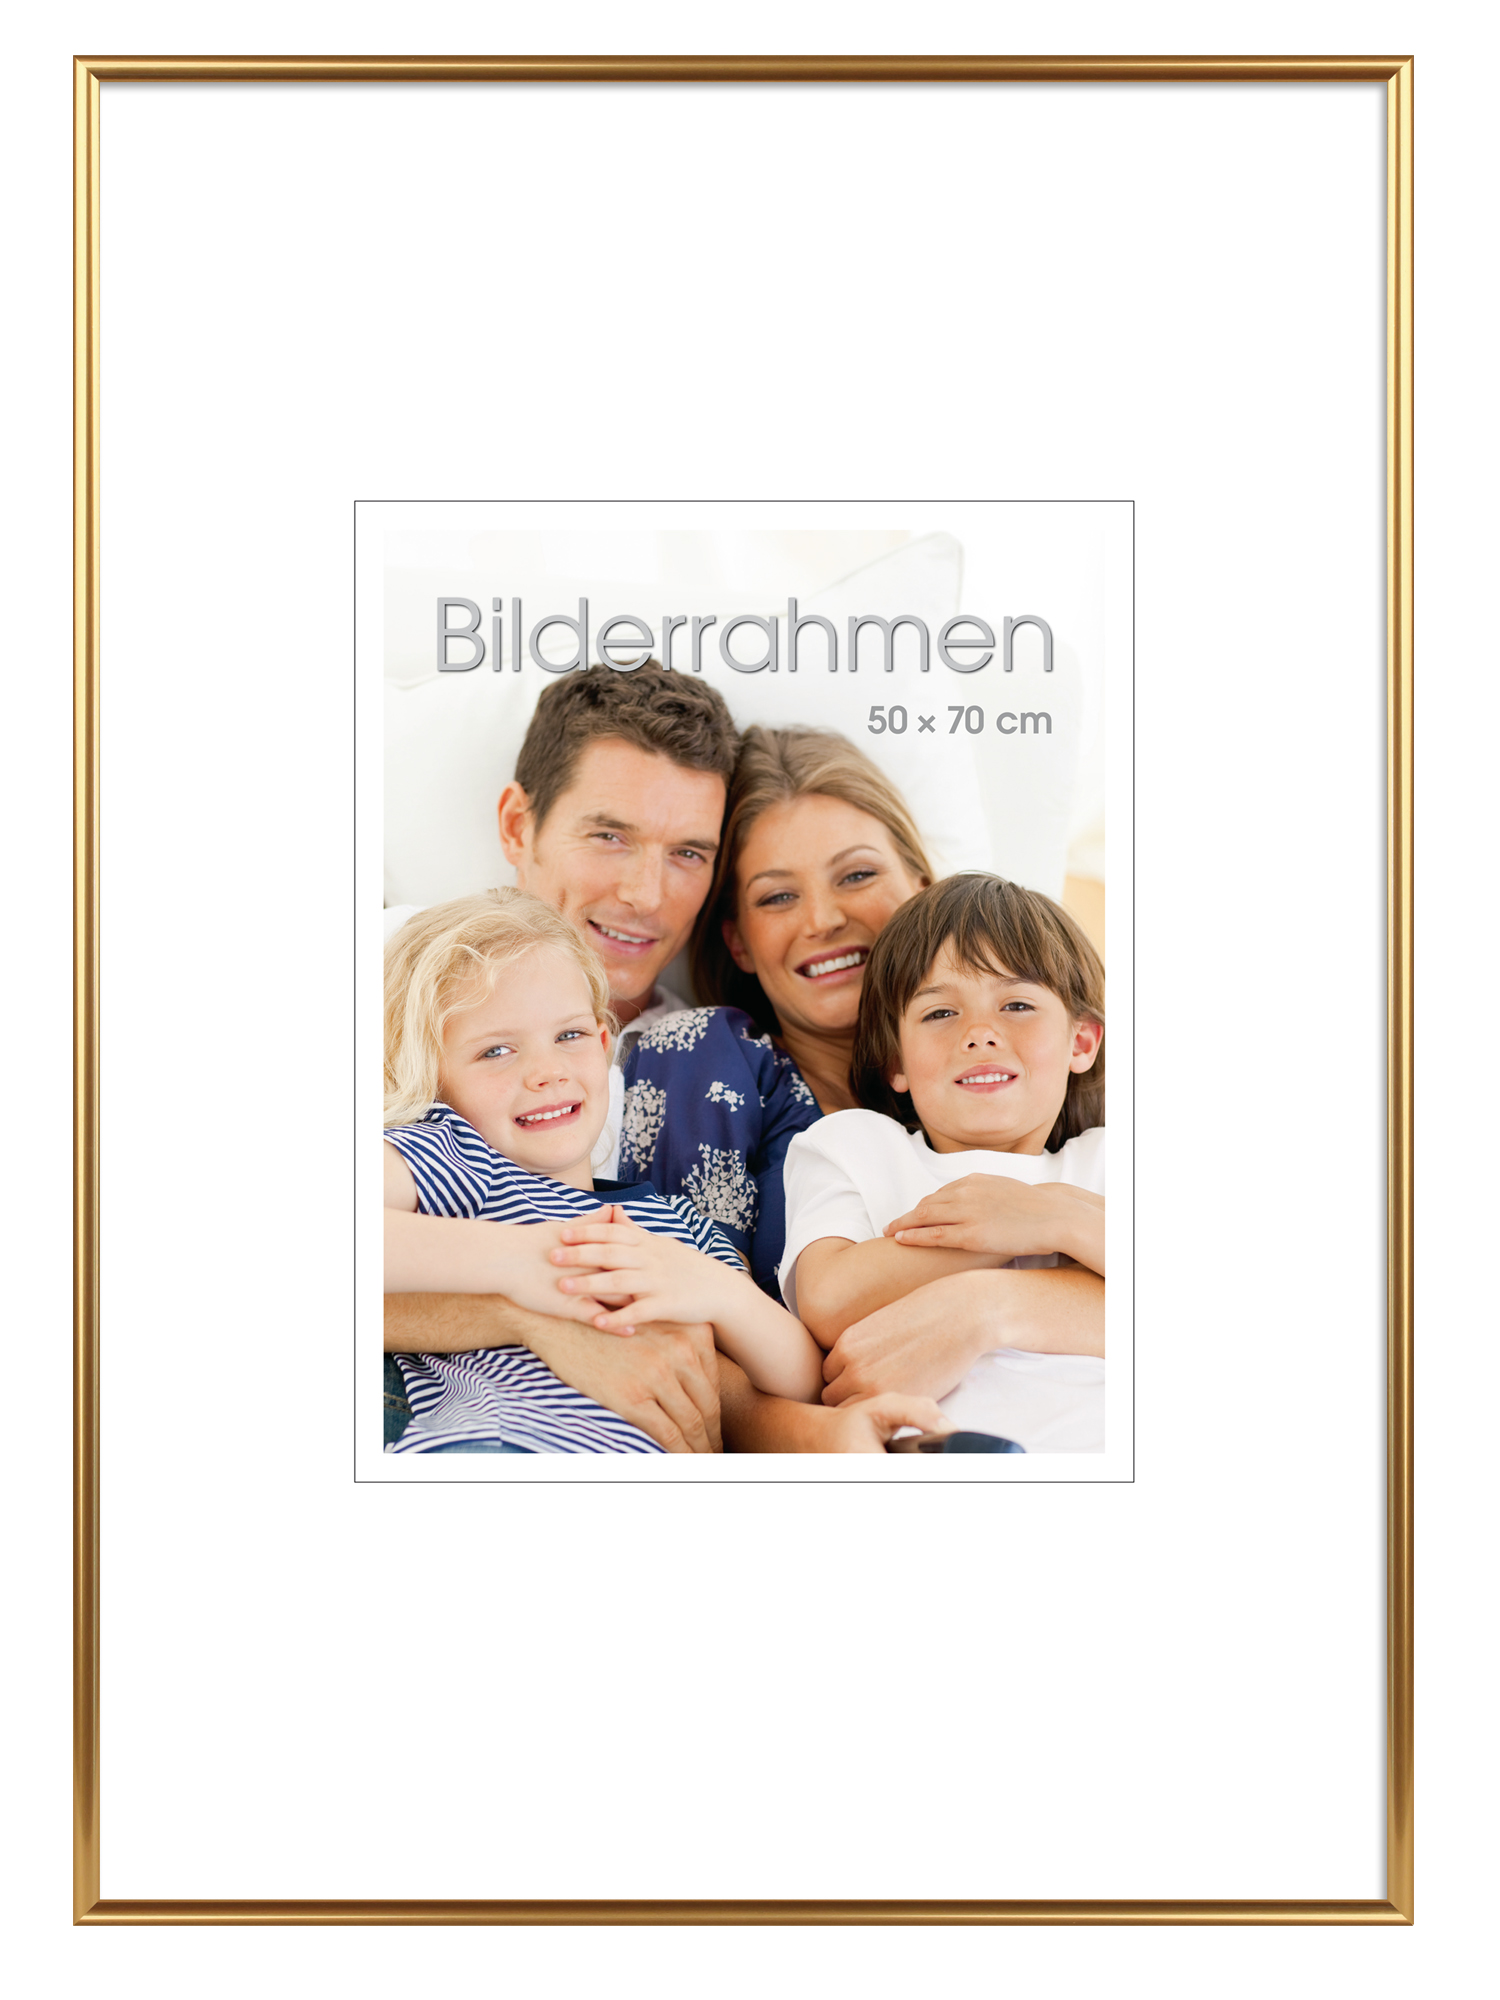 INTERTRADING Bilderrahmen 50 x 70 cm gold